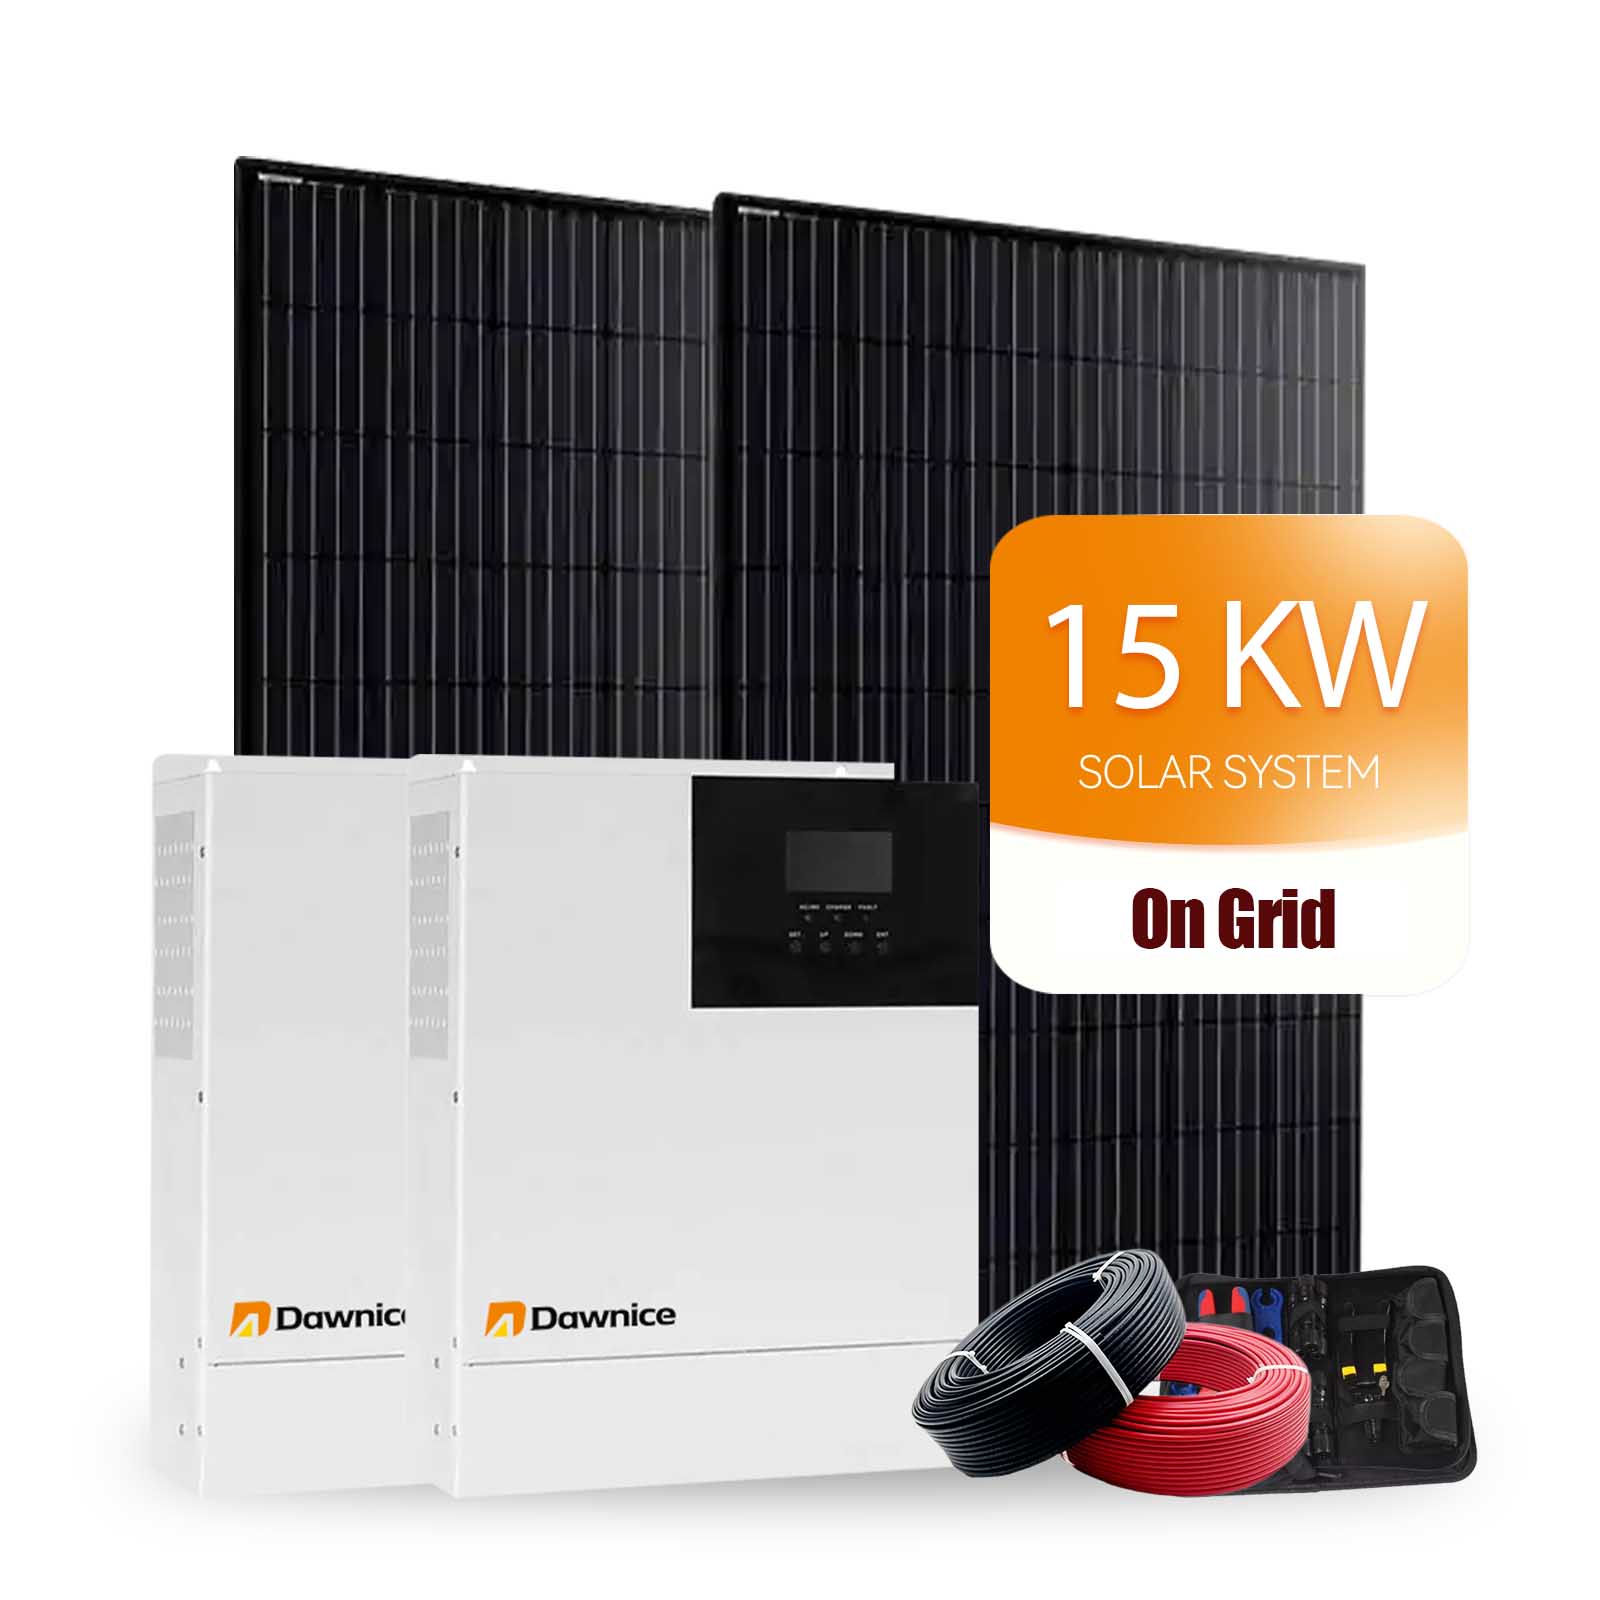 15 kw on grid solar system price